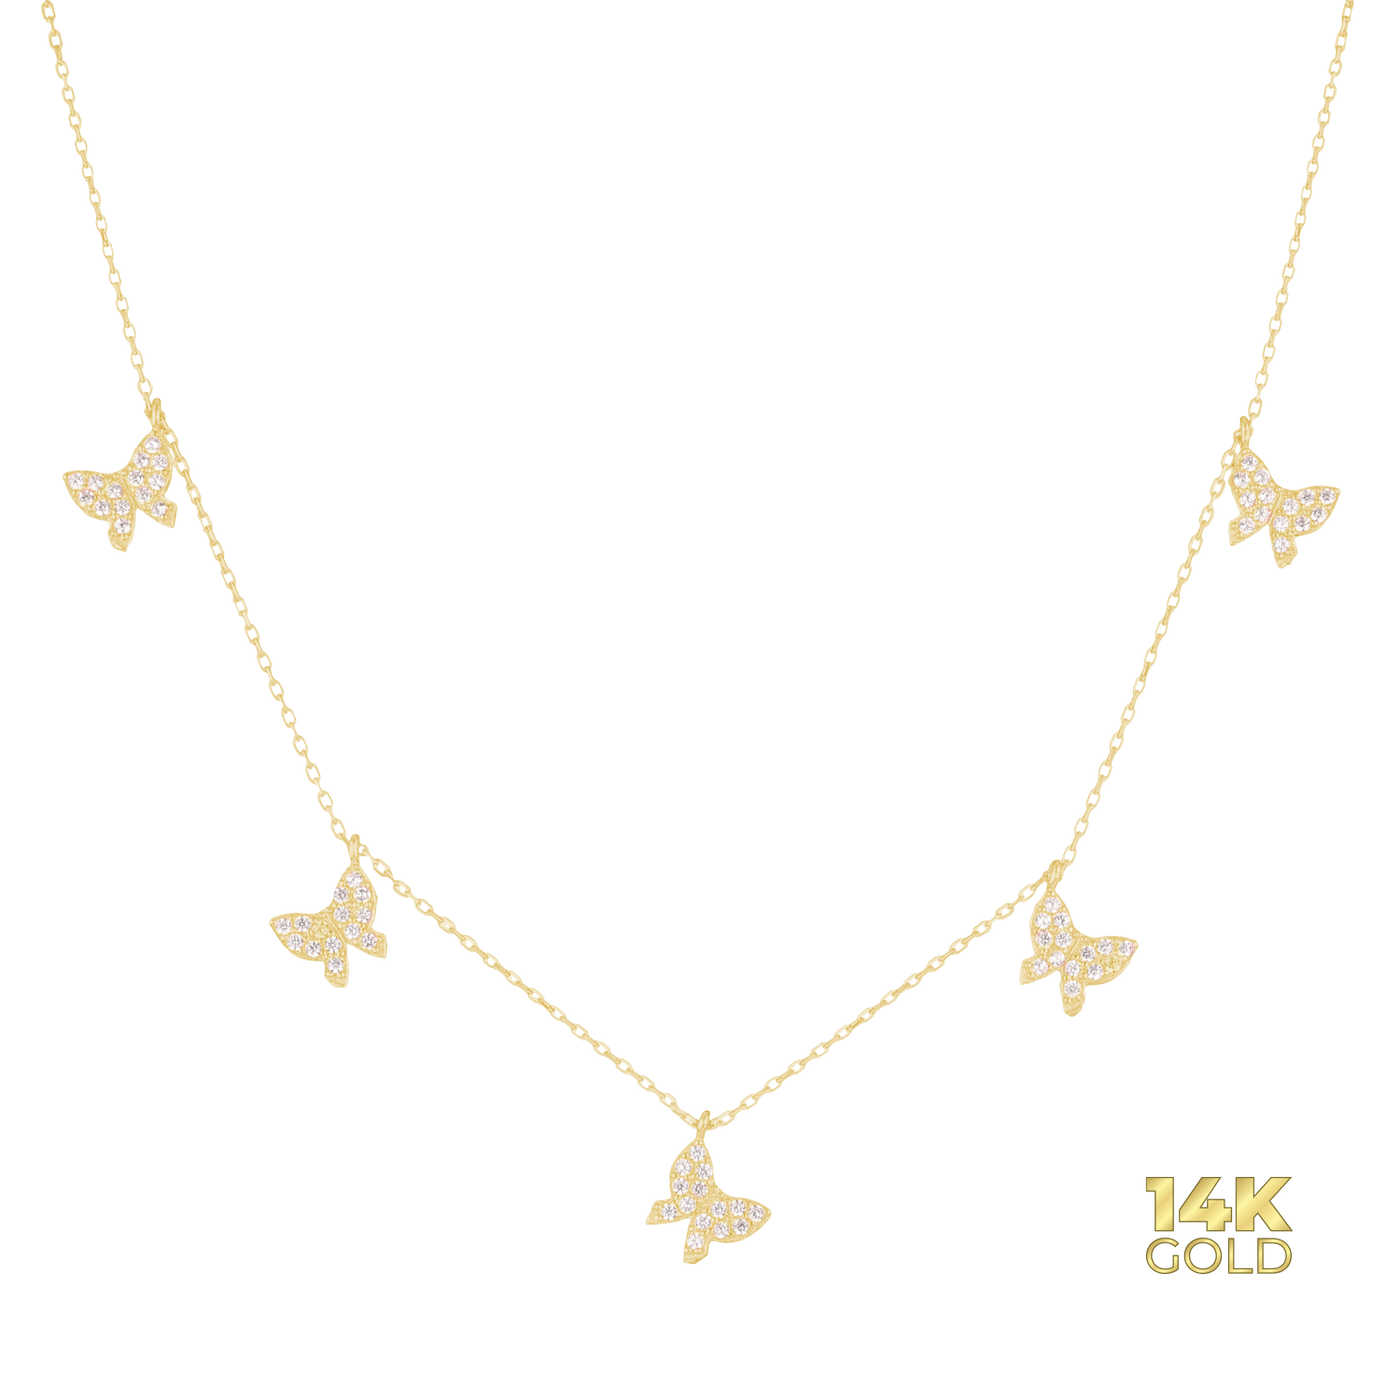 14K - 585 gold butterfly necklace